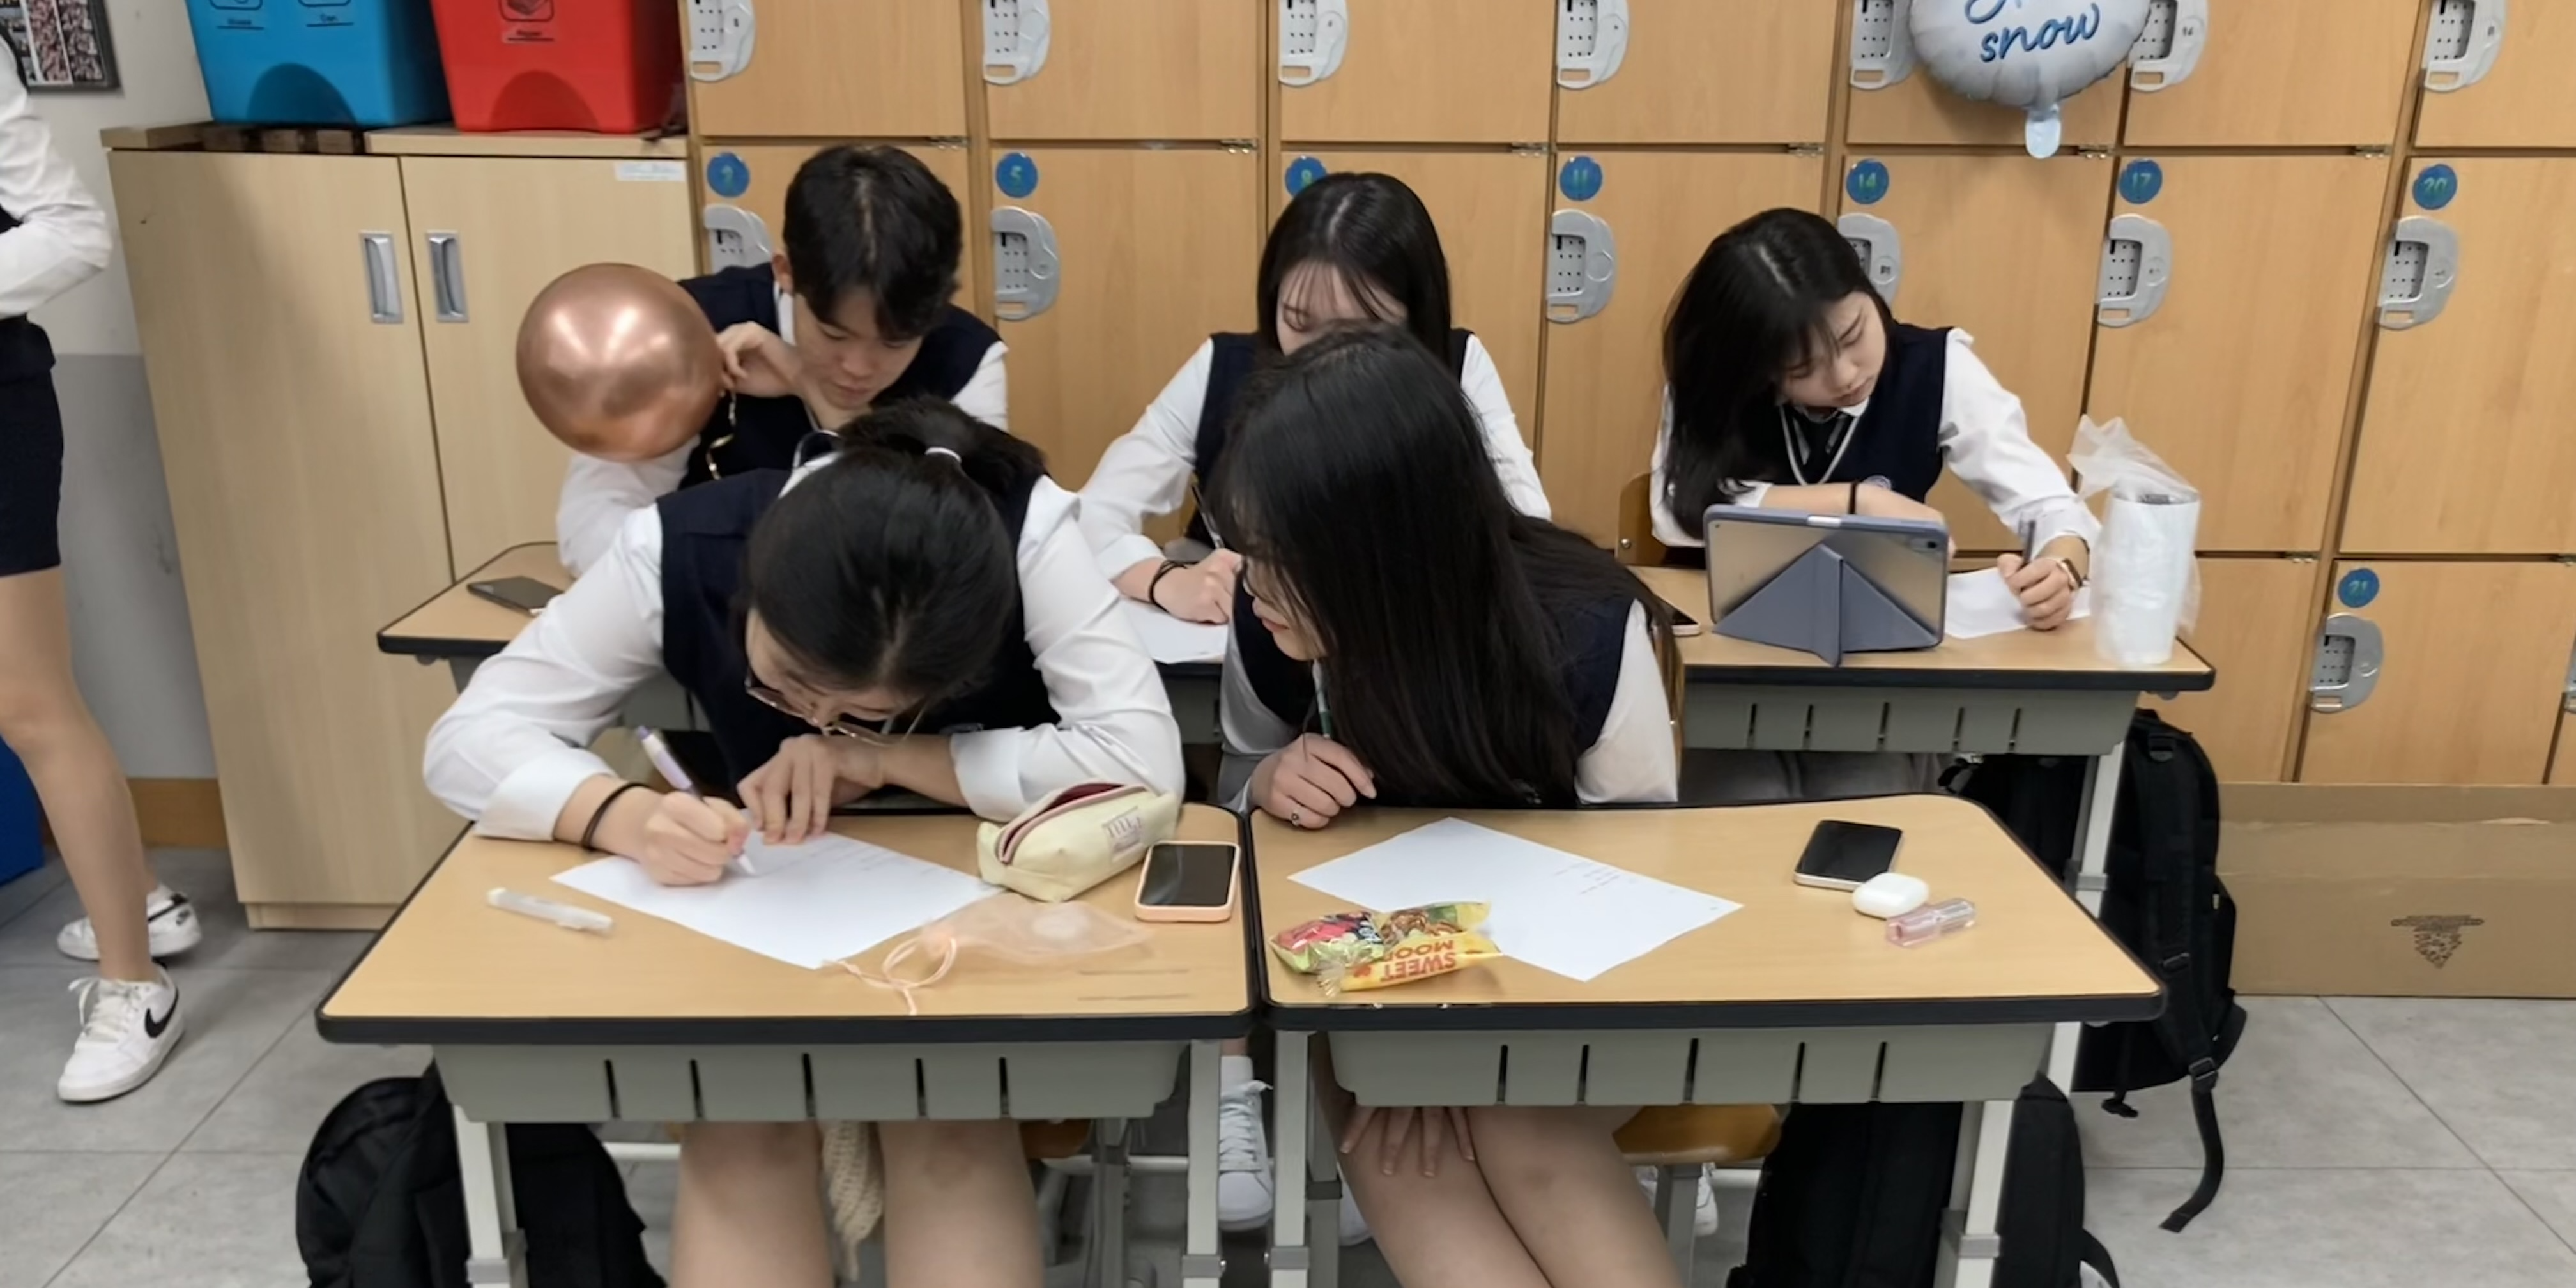 South Korean students still struggle under a draconian system